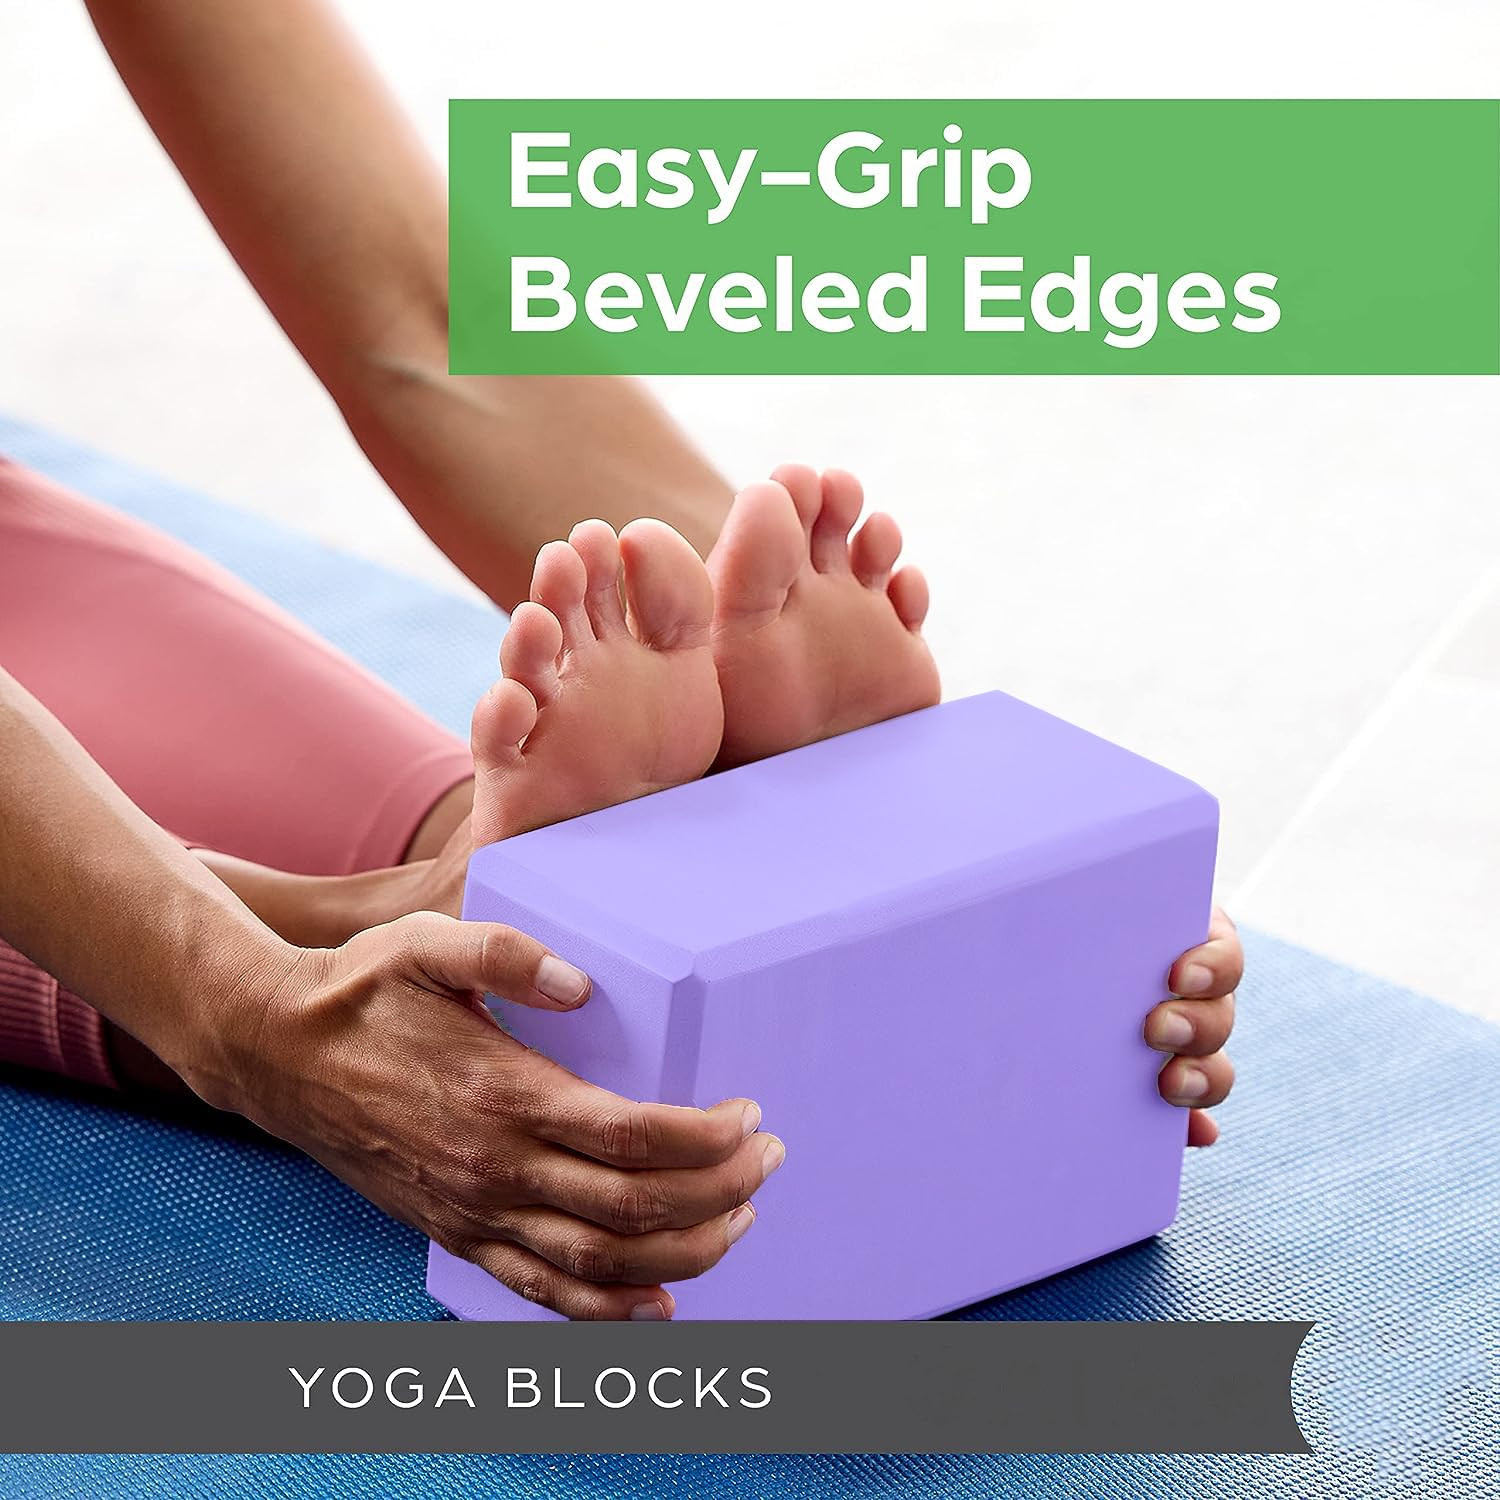 Kuber Industries High-Density Yoga Block|Lightweight & Portable Yoga Brick|Improve Strength & Flexibility (Light Purple)